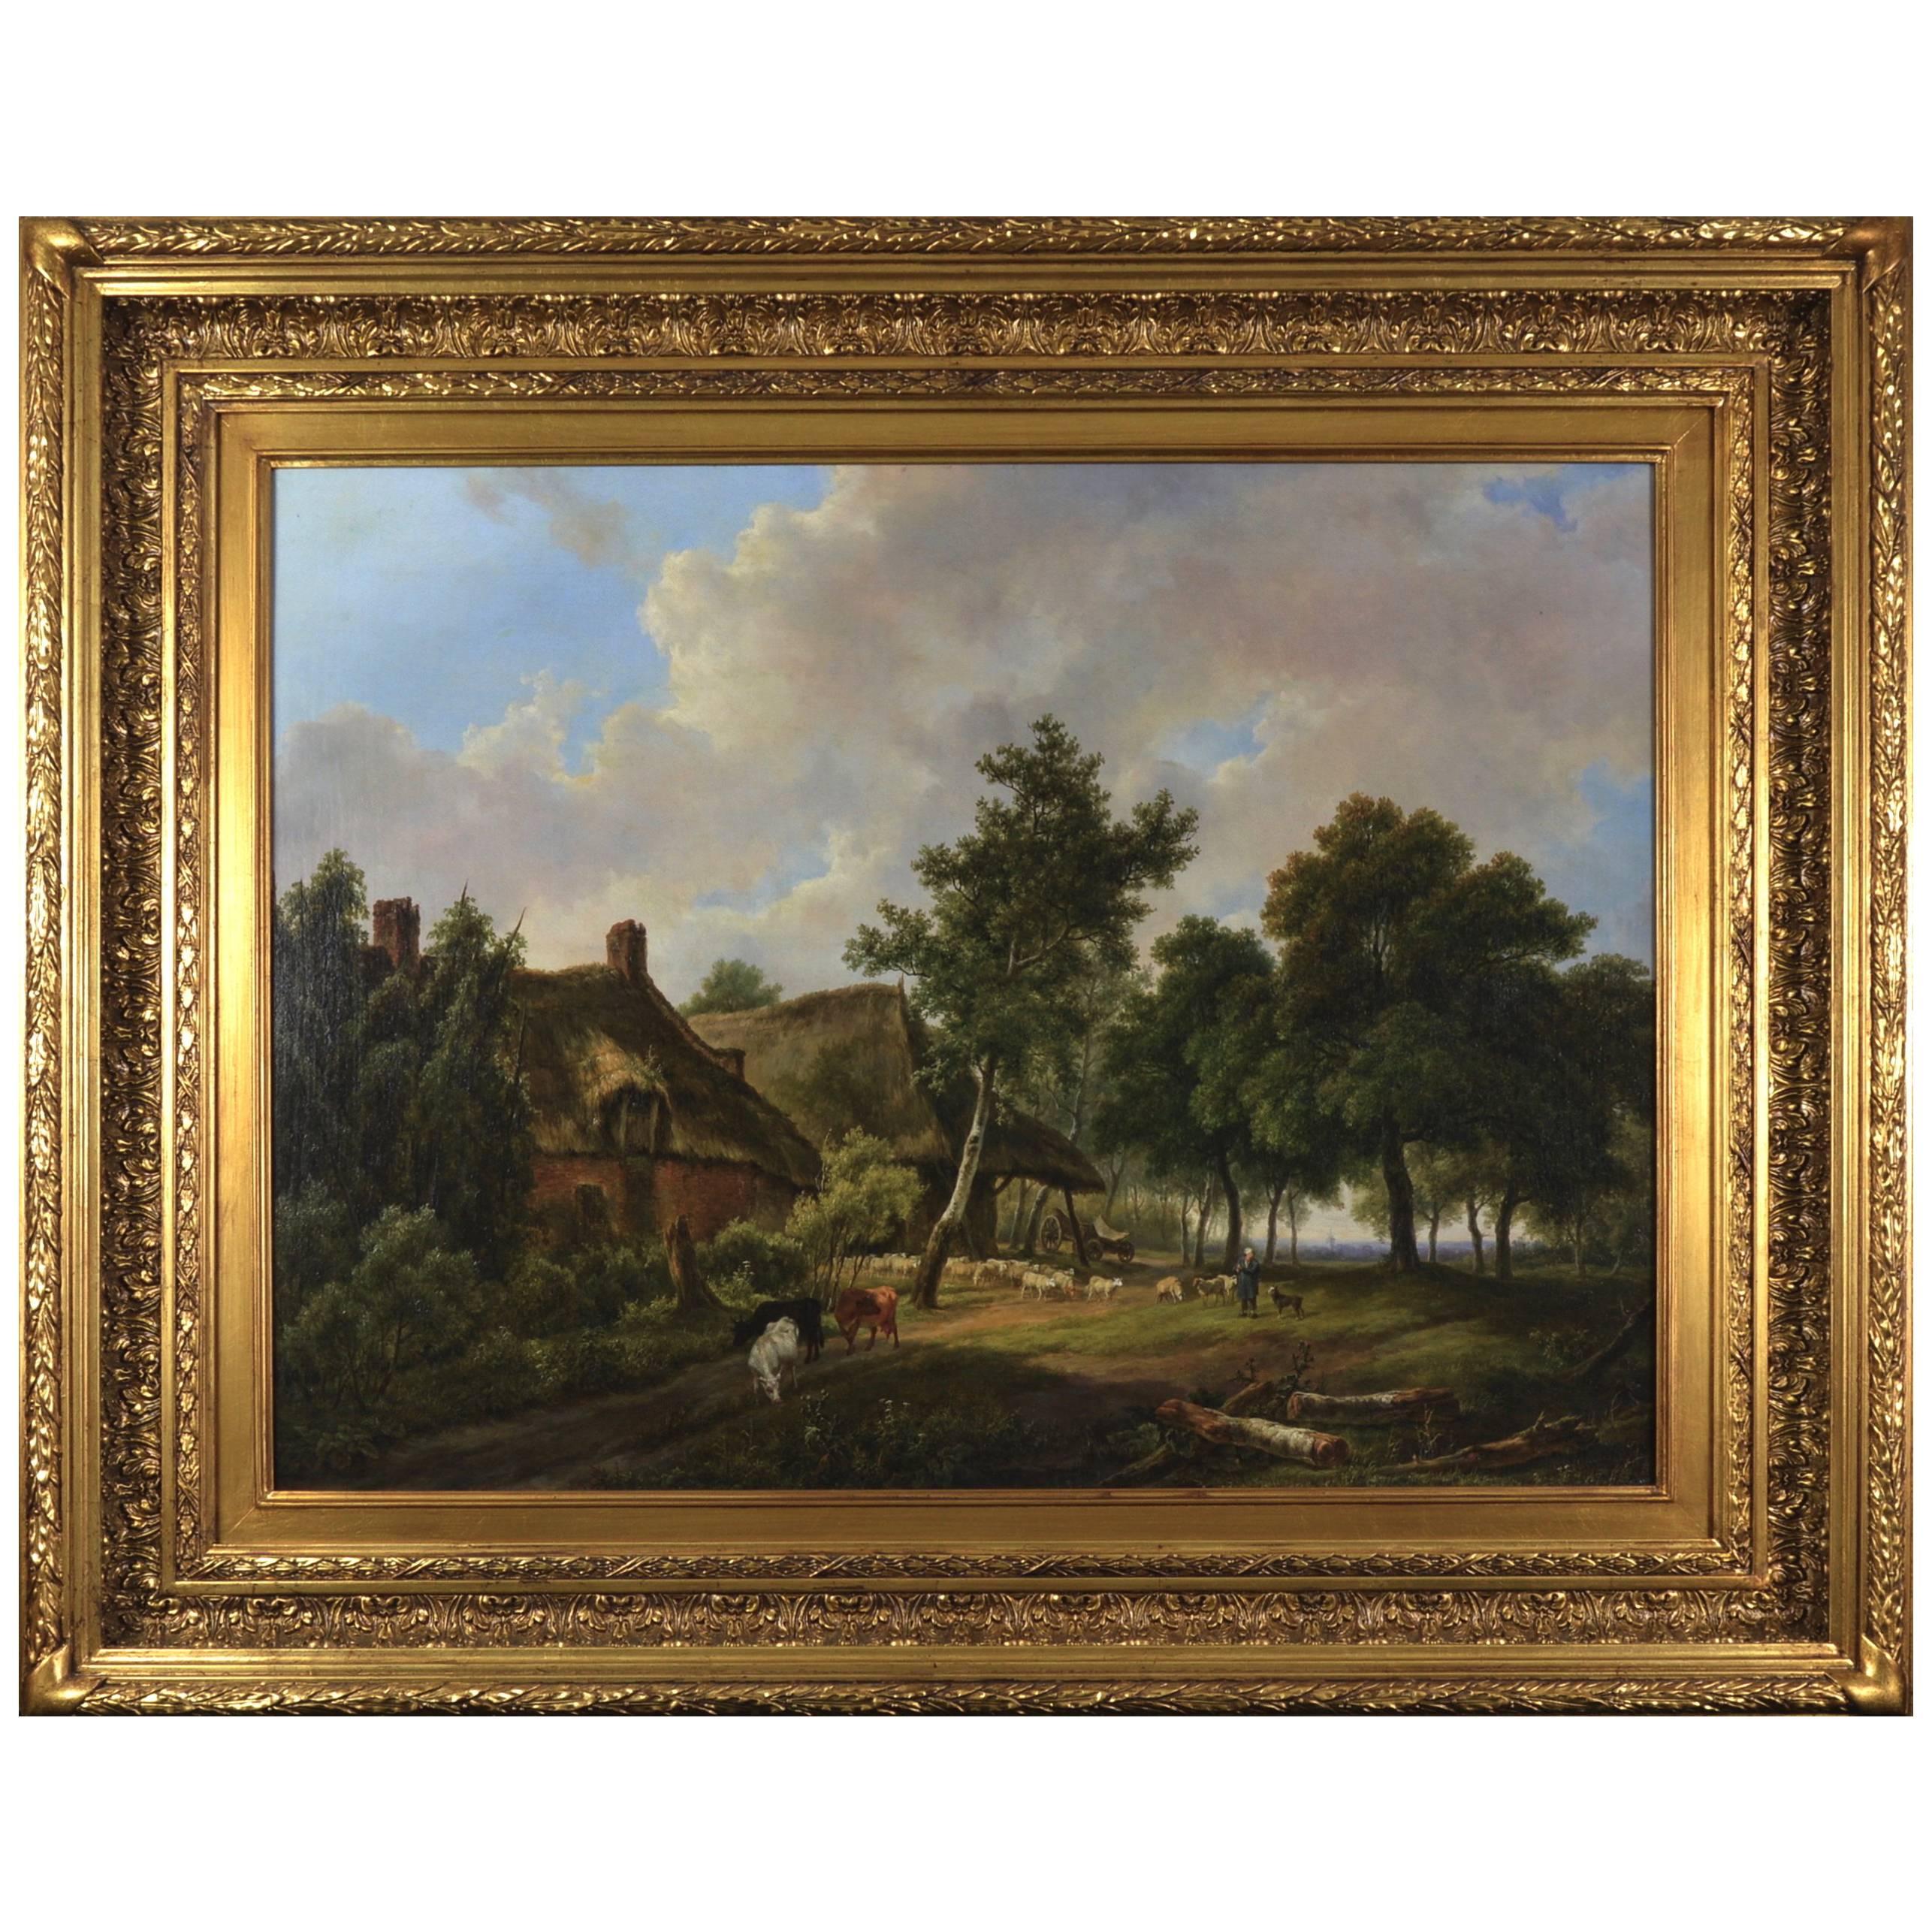 Village Scene in a Landscape Setting, Flemish School, 19th Century Oil on Canvas